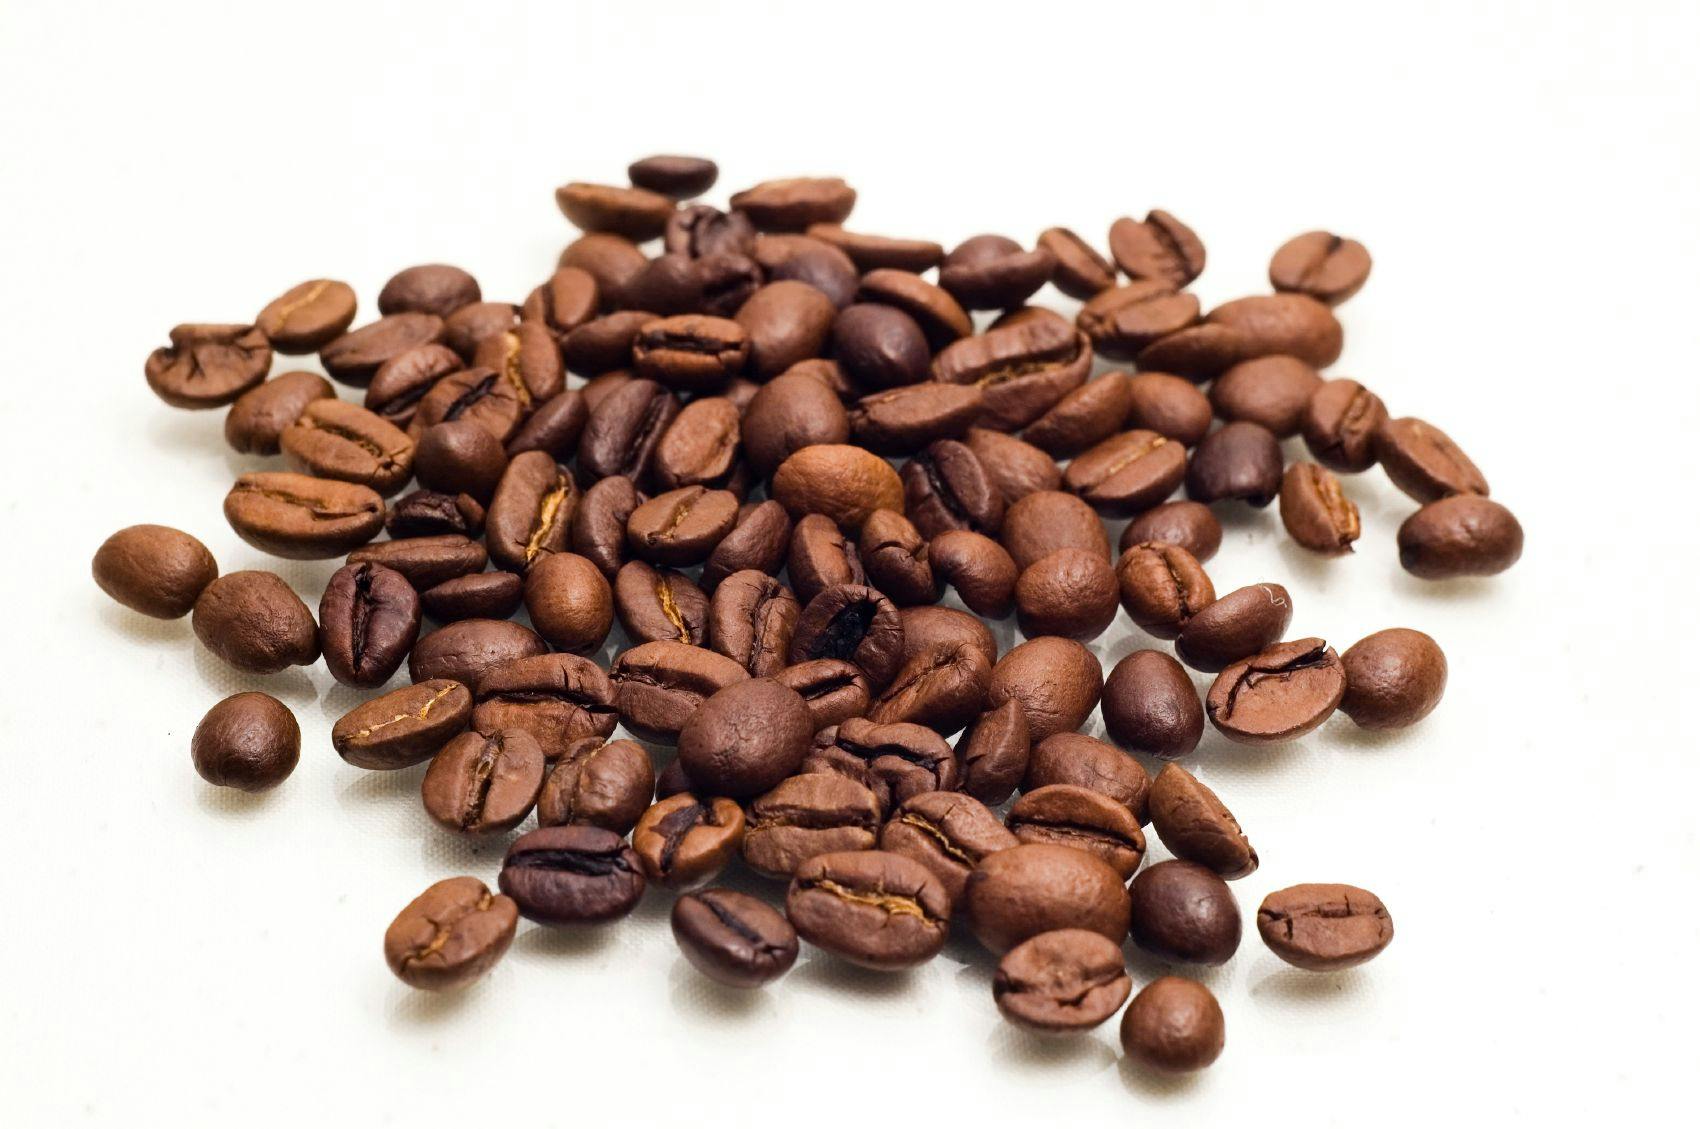 Caffeine: 2015 Ingredients to Watch for Food, Beverage, Supplements